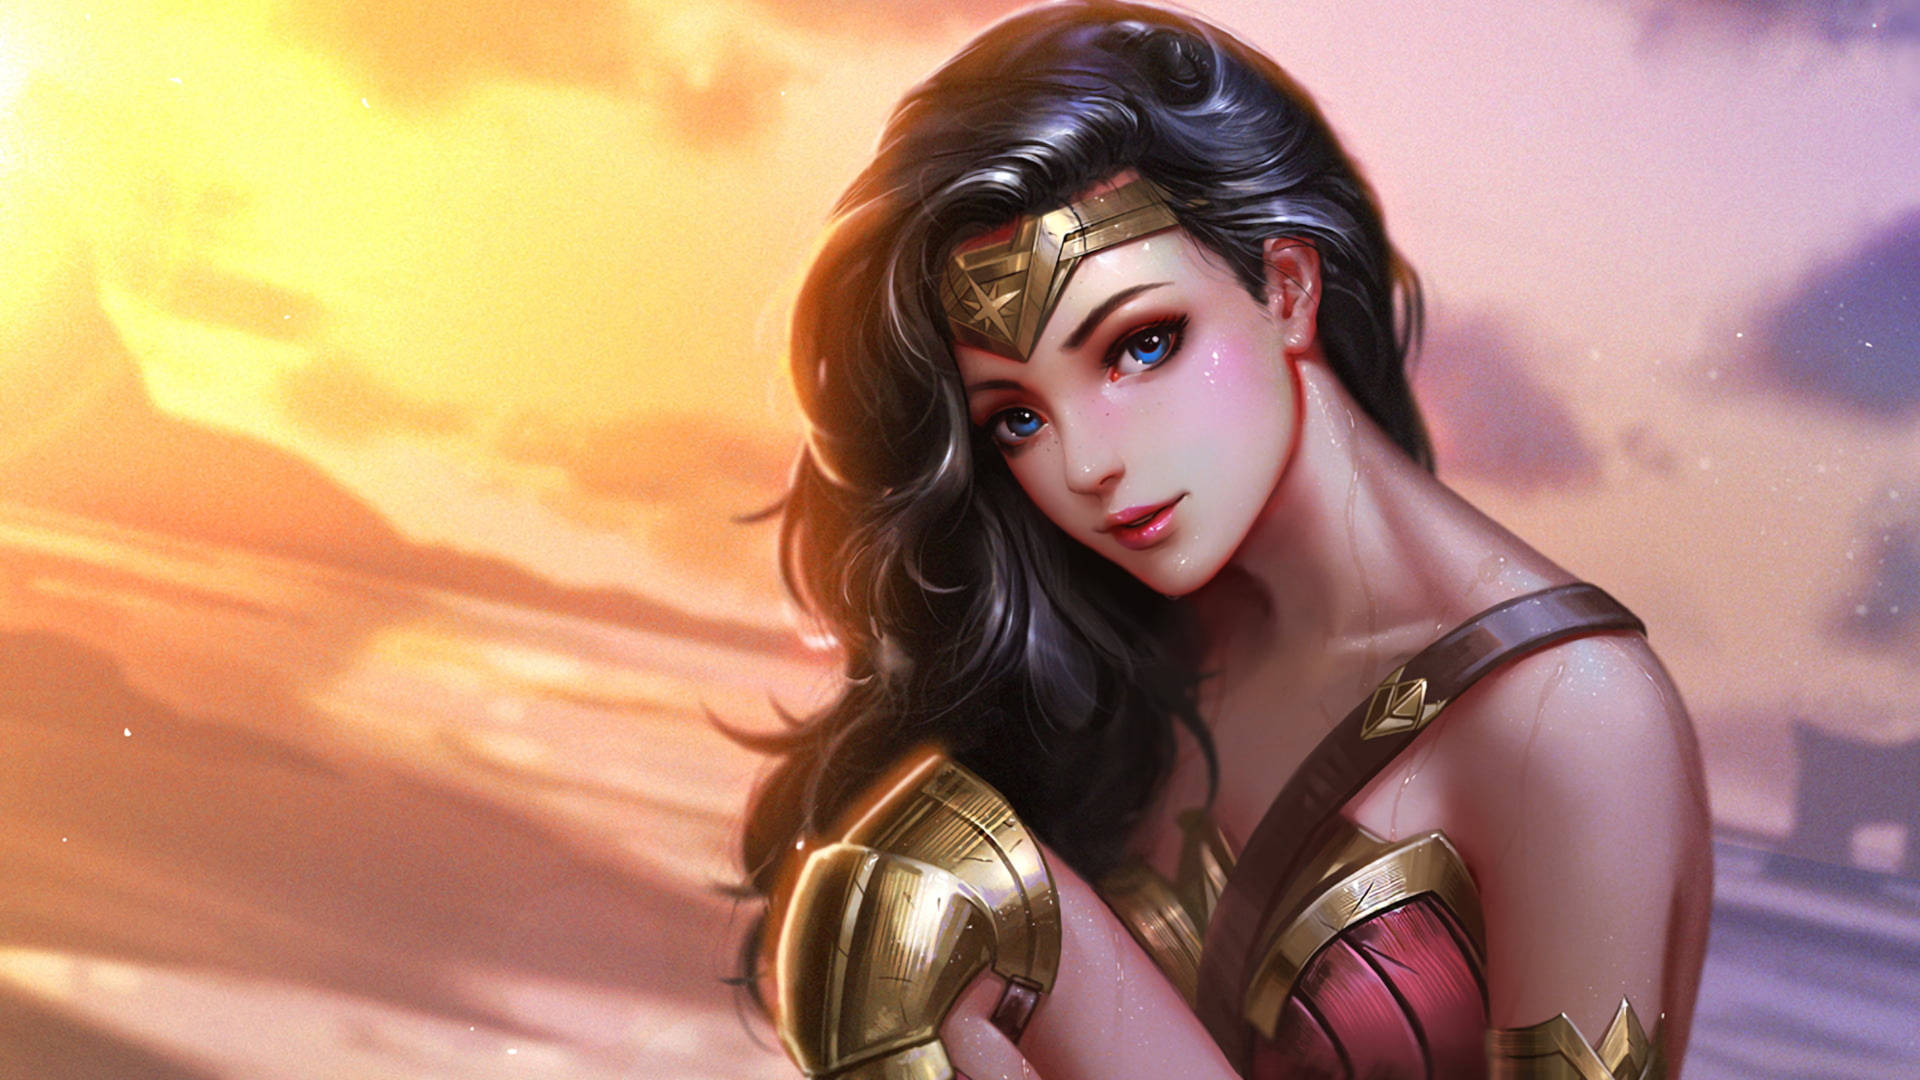 Cute Girly Wonder Woman Art Background